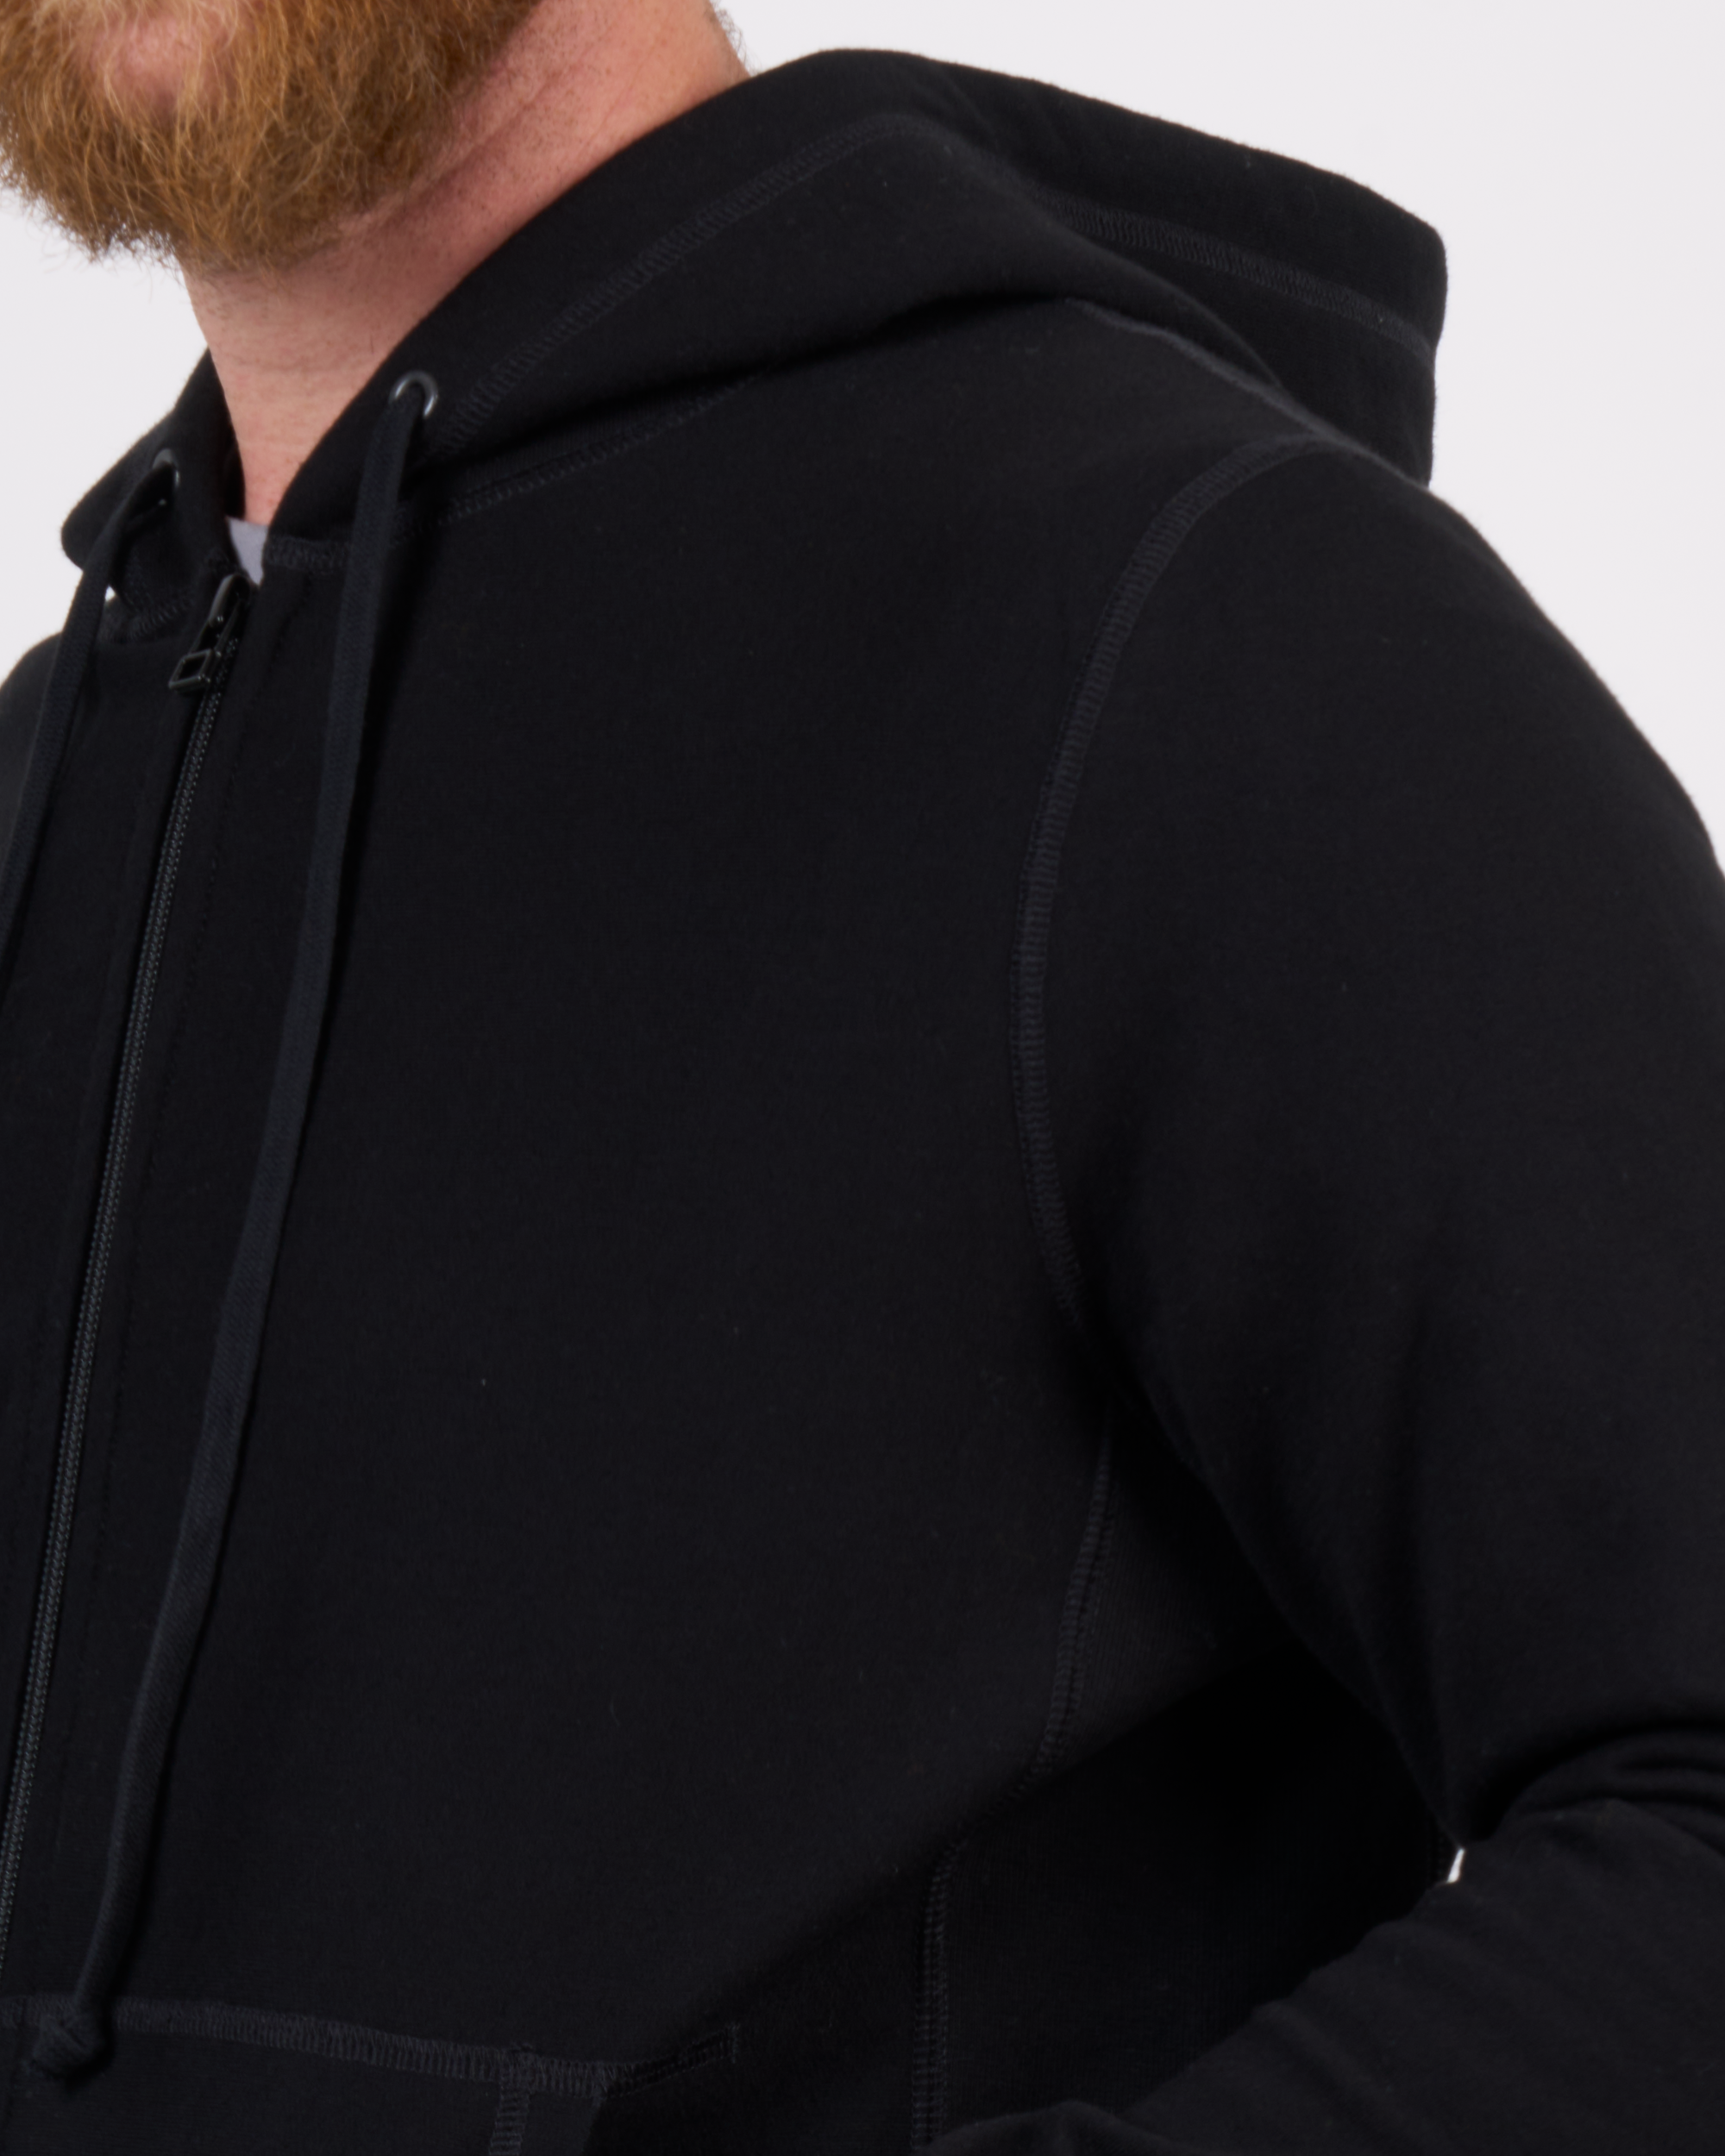 Foreign Rider Co Organic Cotton Black Zip Hoodie Sweater Shoulder Detail